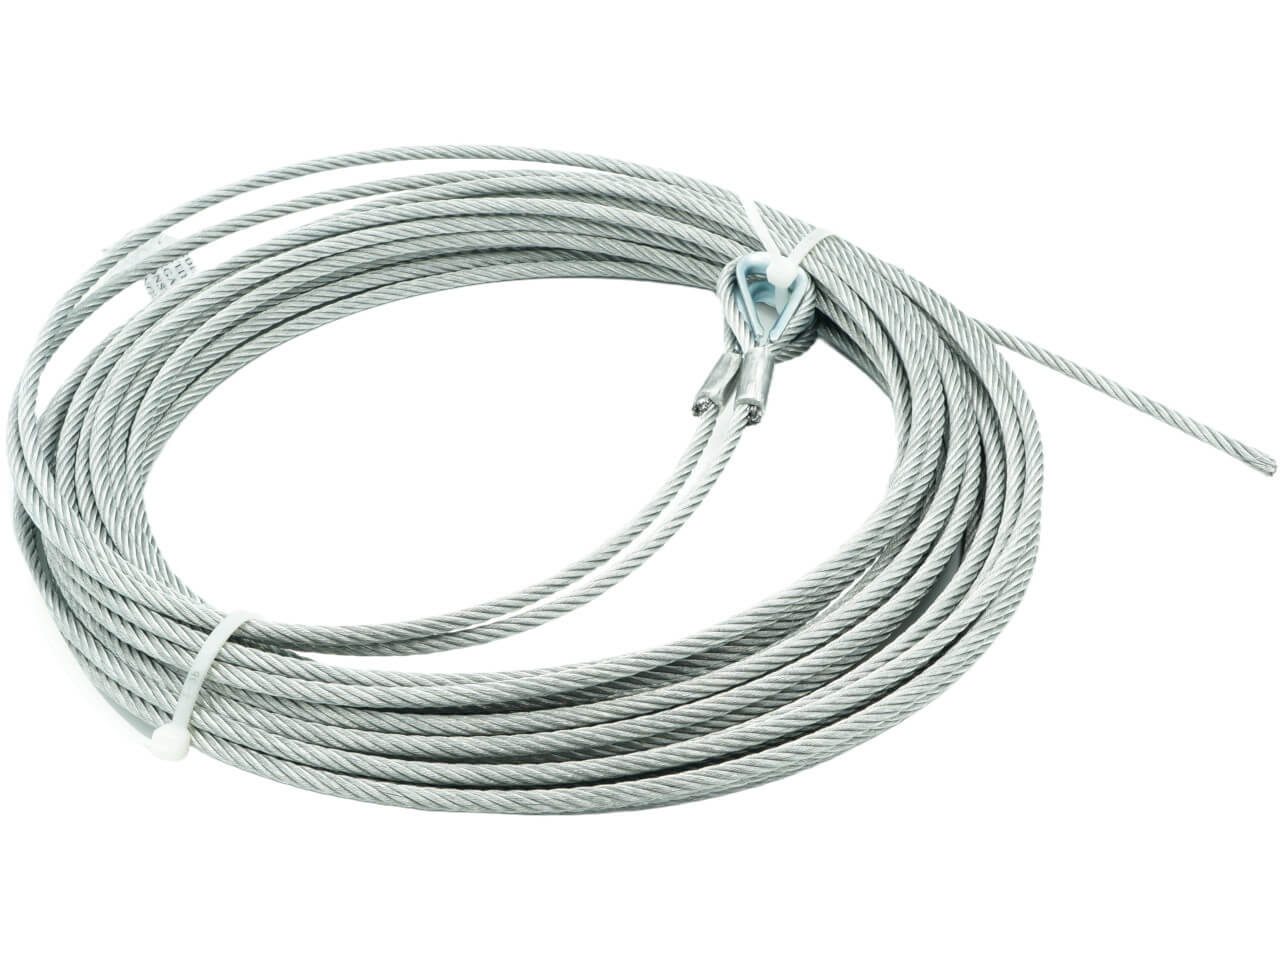 Cable Diameter 4,0mm Length 14m